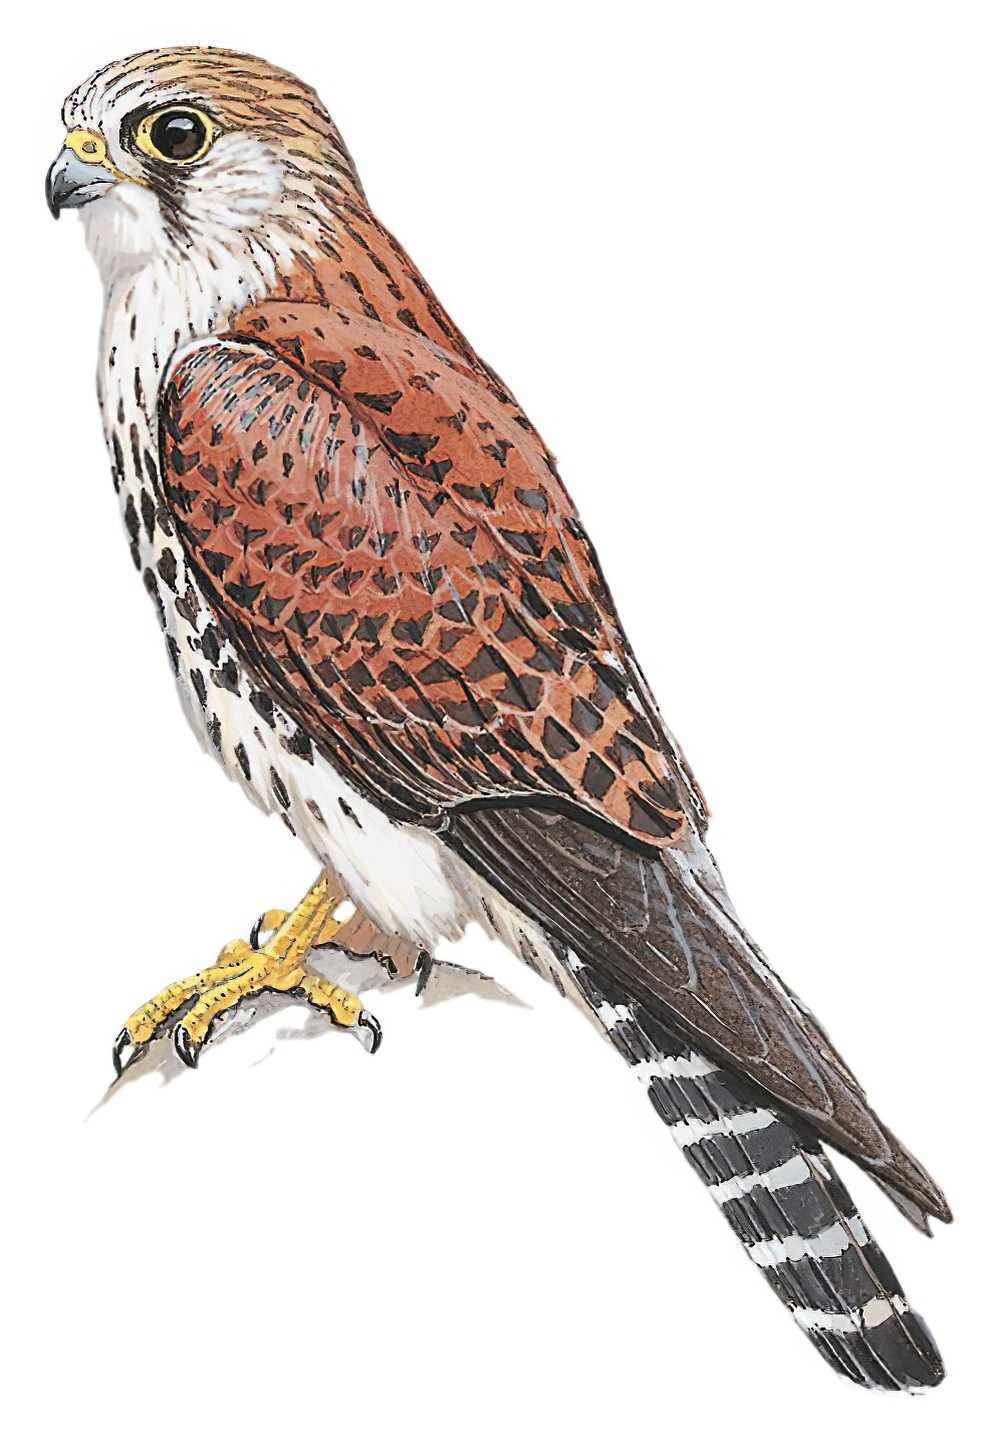 Madagascar Kestrel / Falco newtoni